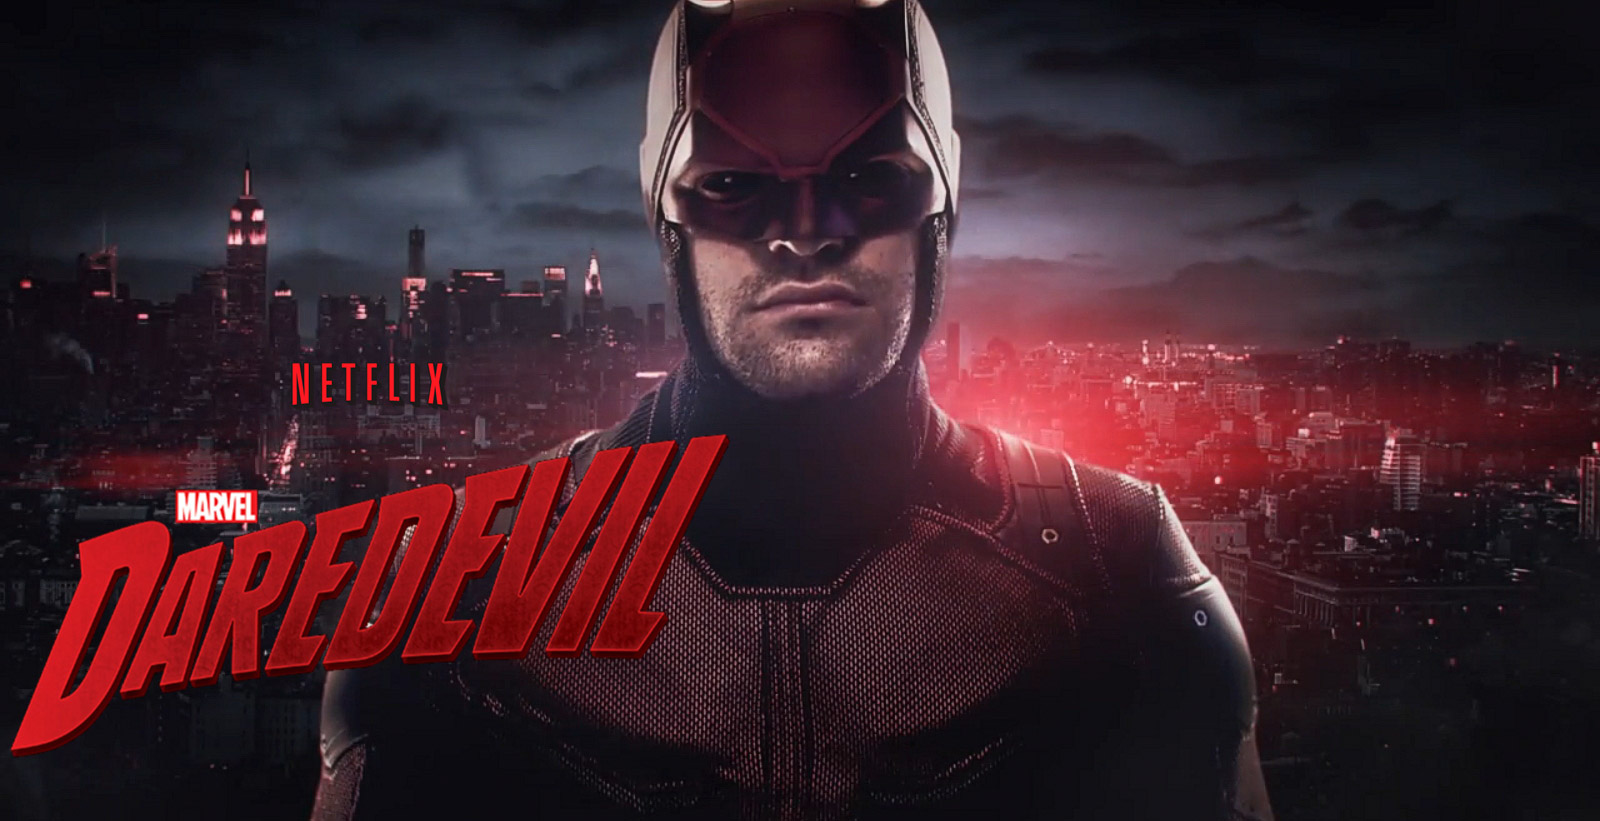 Poster of original Daredevil by Marvel.